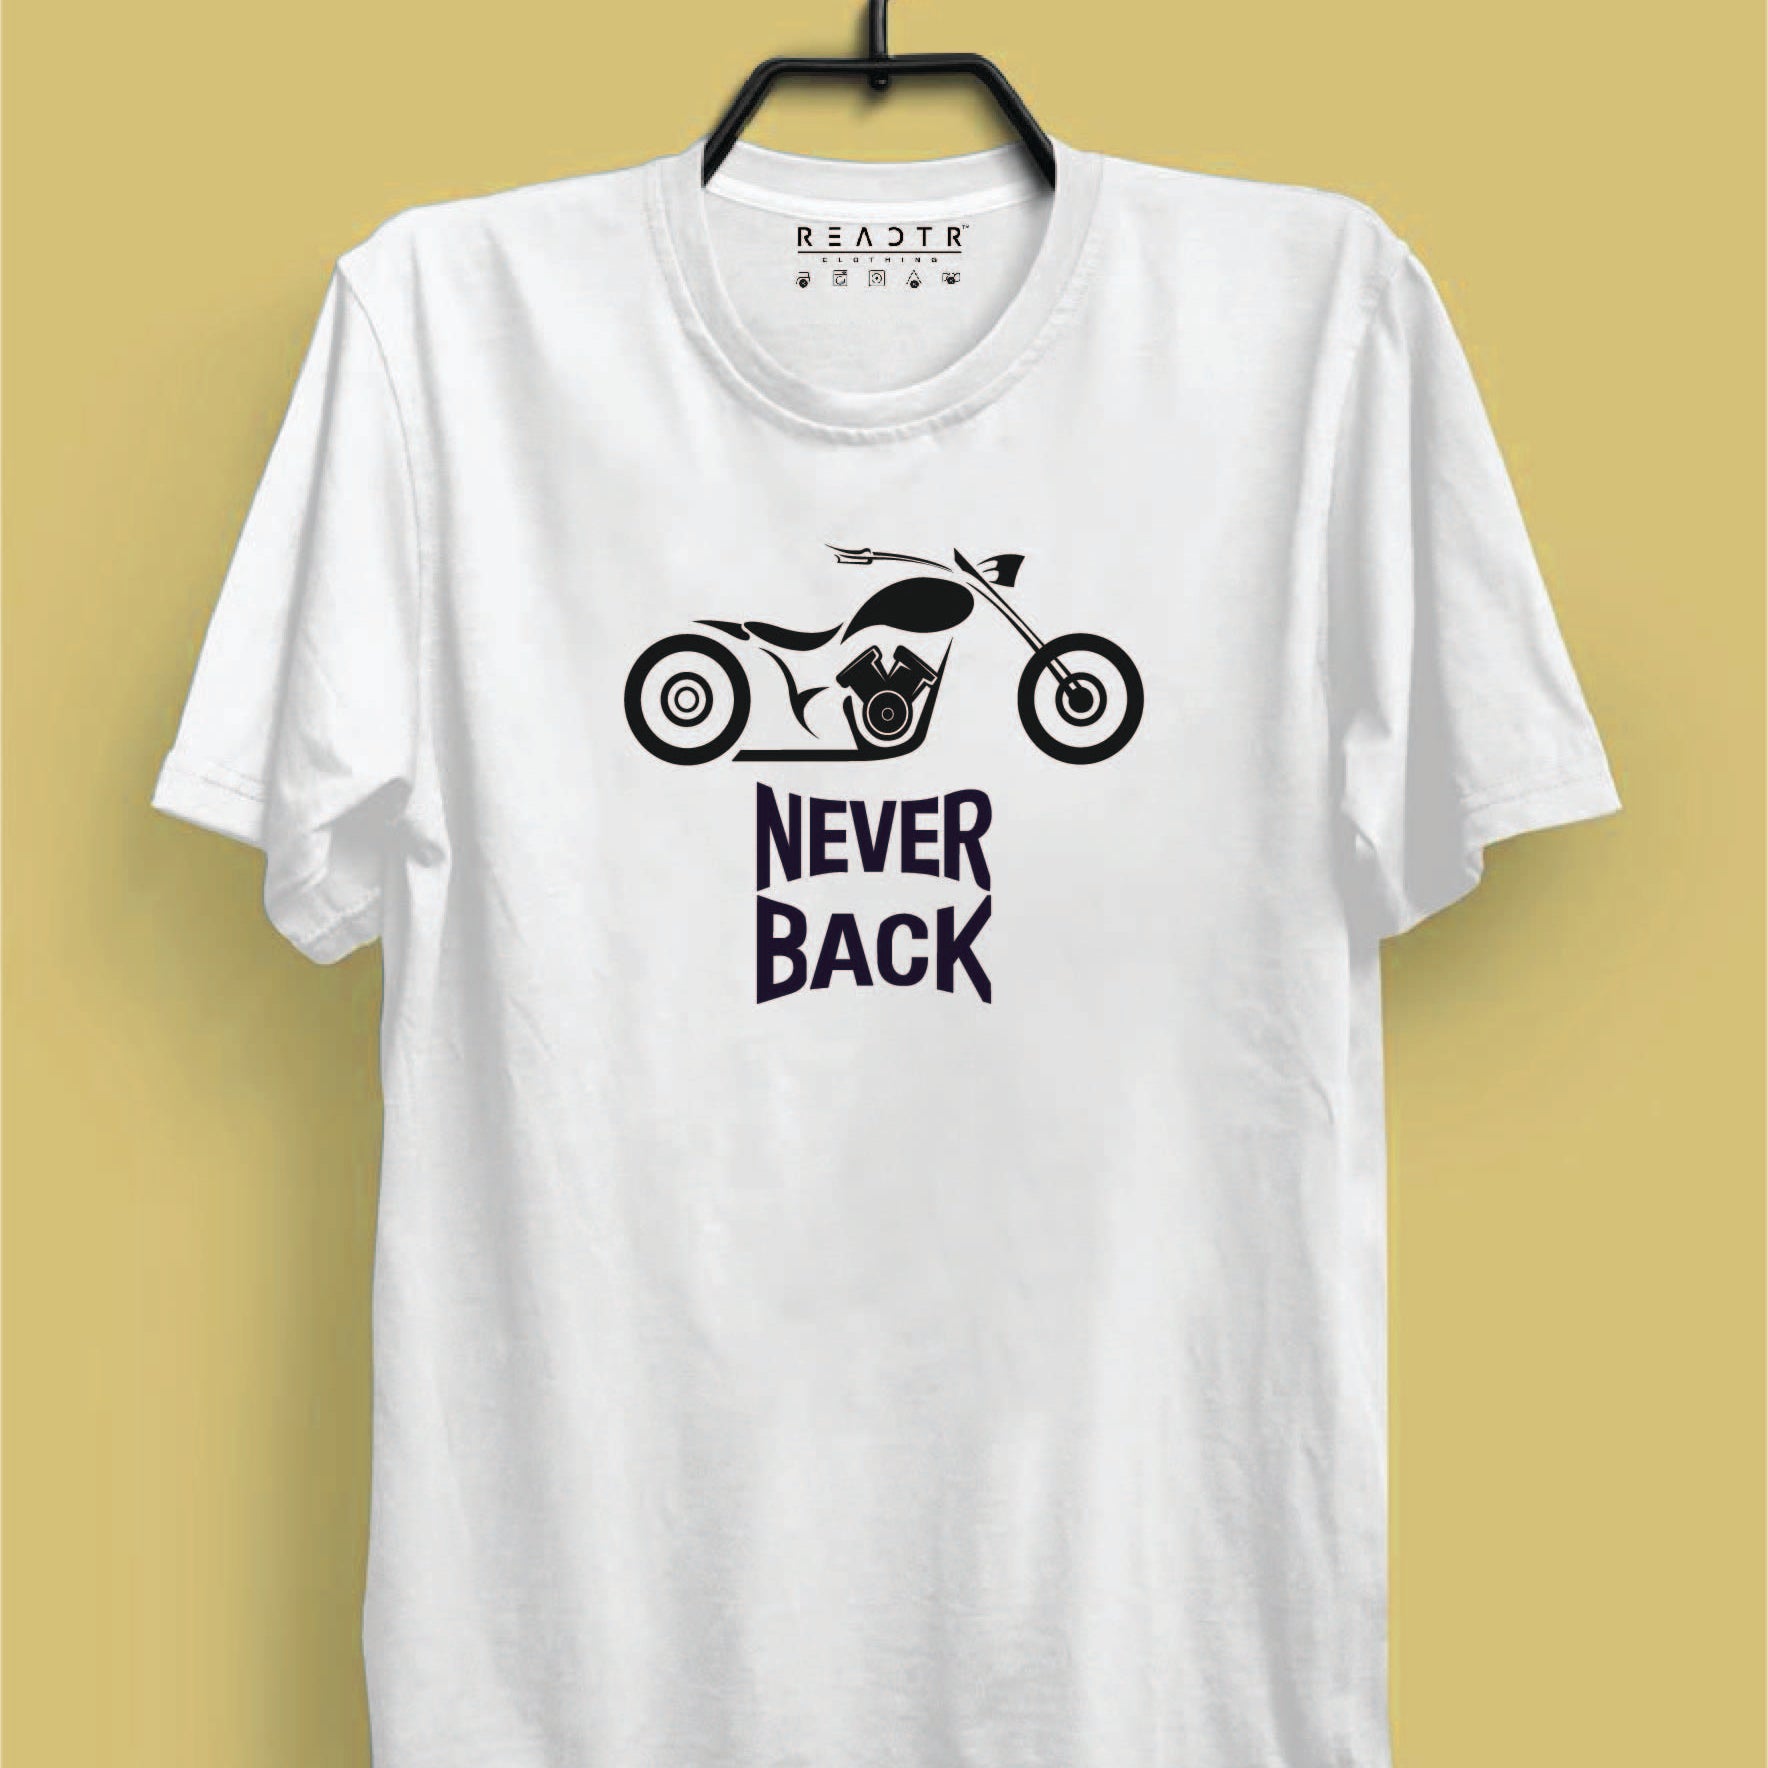 Never Look Back Reactr Tshirts For Men - Eyewearlabs